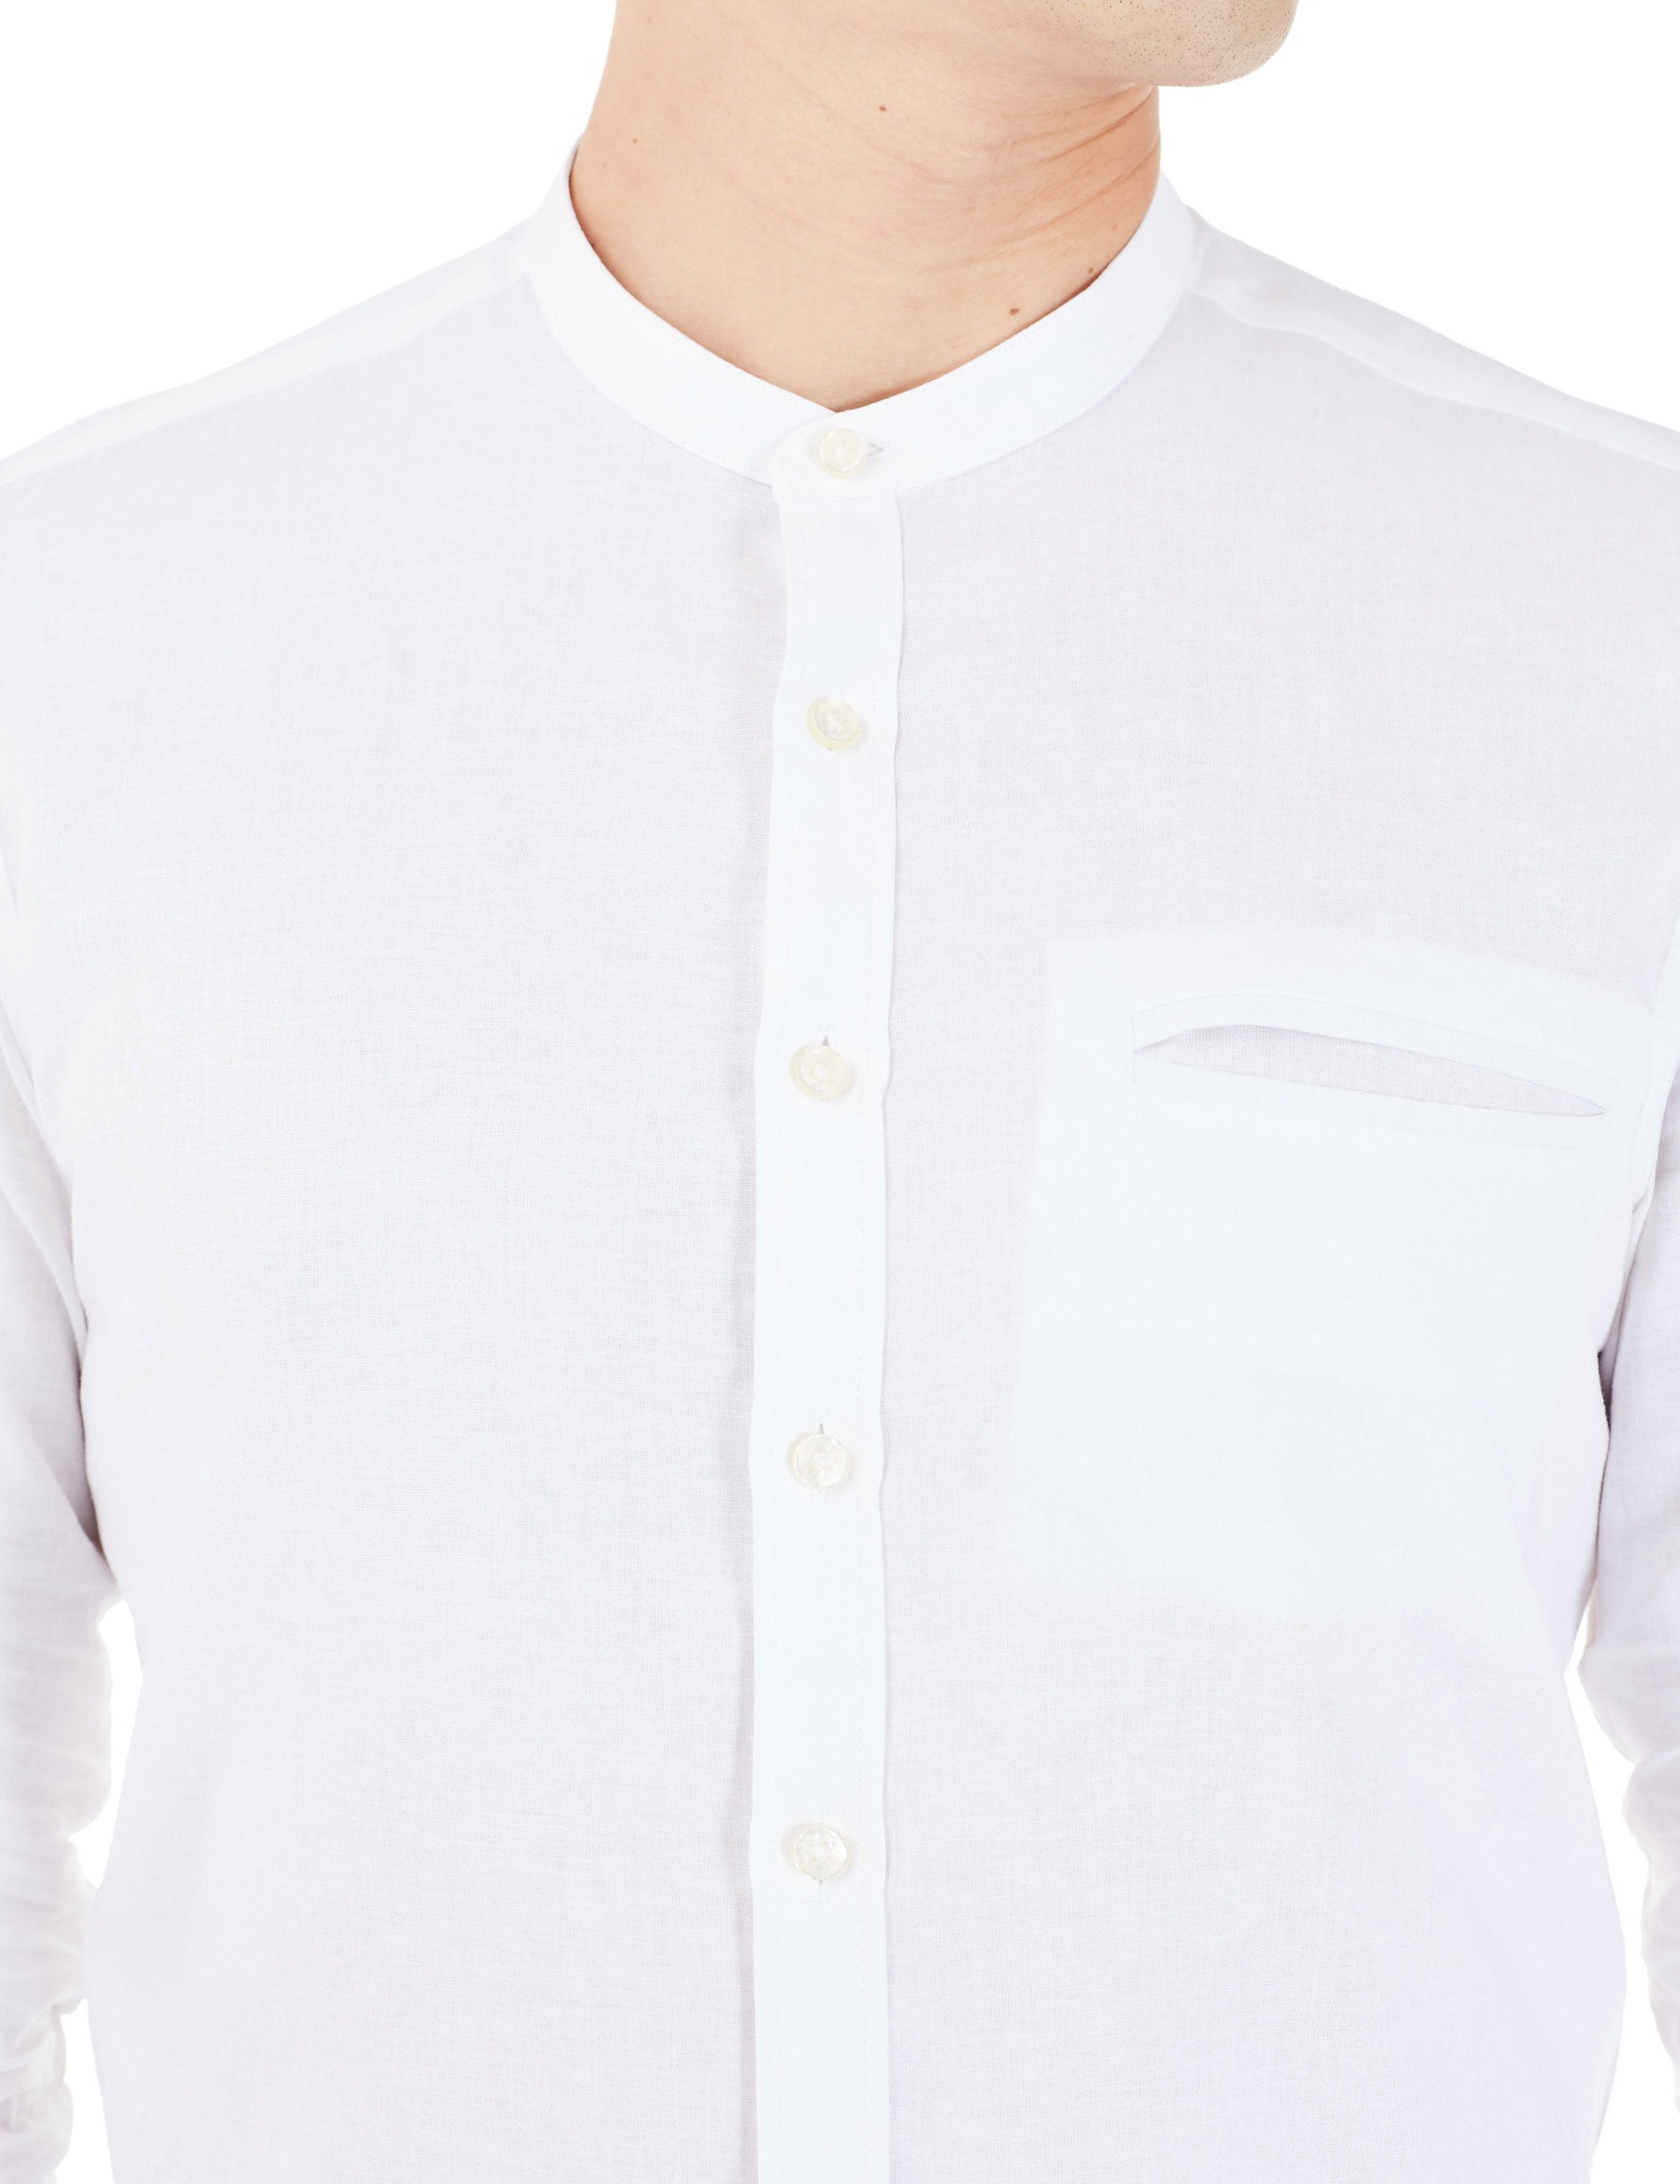 Solid White Cotton Linen Mandarin Collar Welt Pocket Slim/Tailored  Long-sleeve shirt- TF11GP1.28